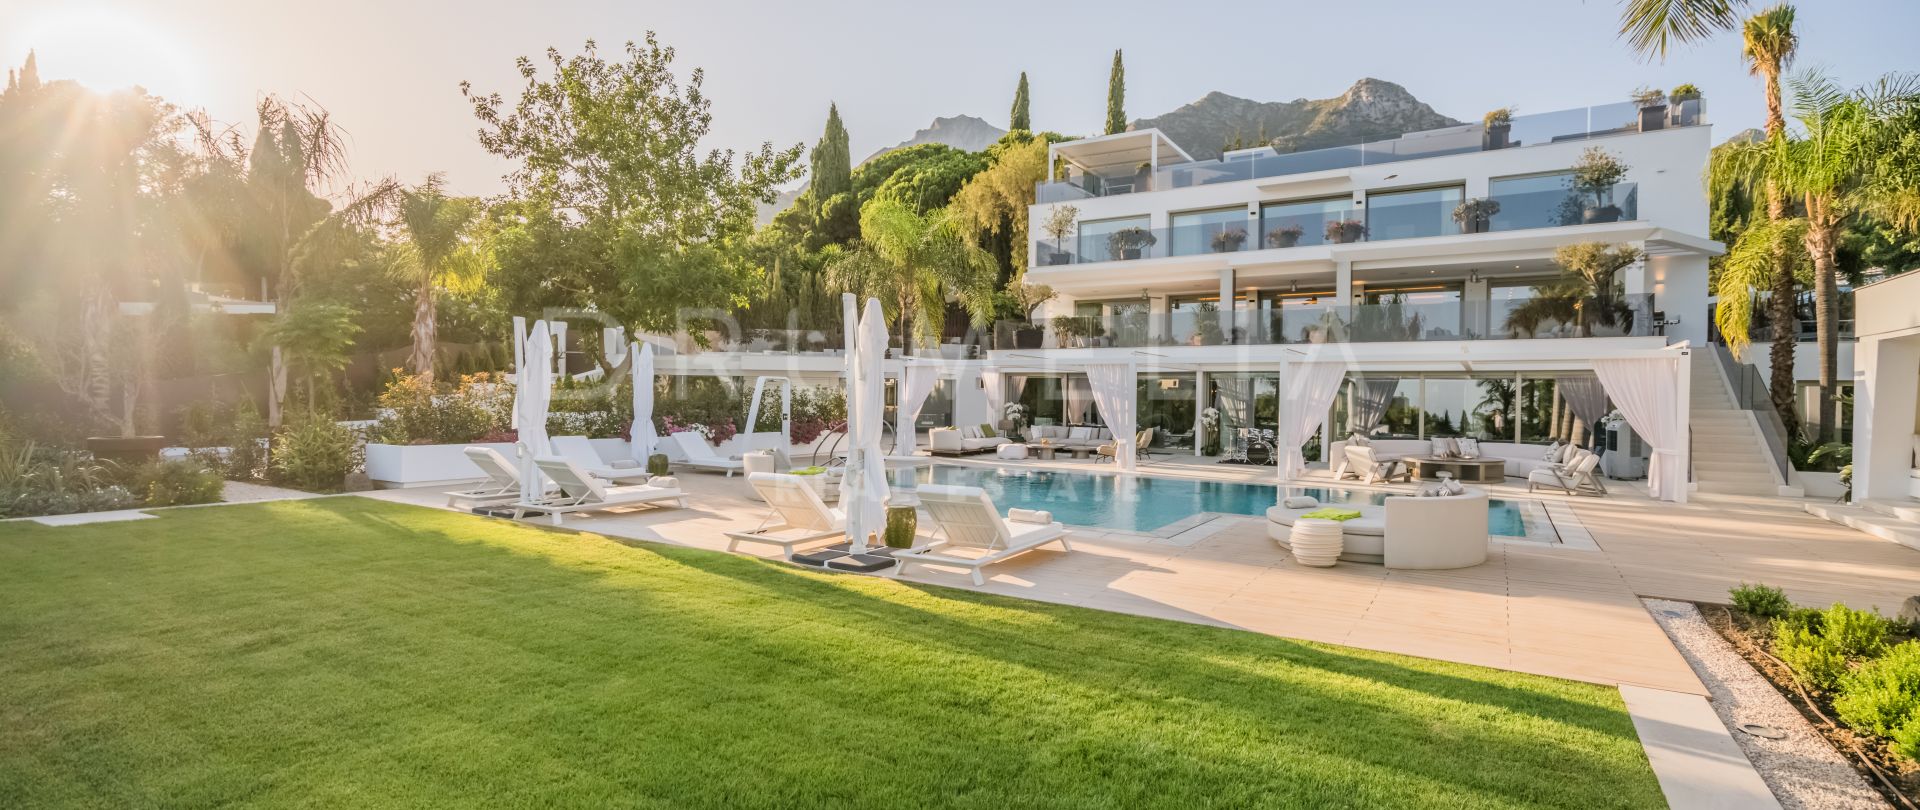 Villa Serenity - Herausragende moderne Luxus-Villa, Cascada de Camojan, Marbella Goldene Meile